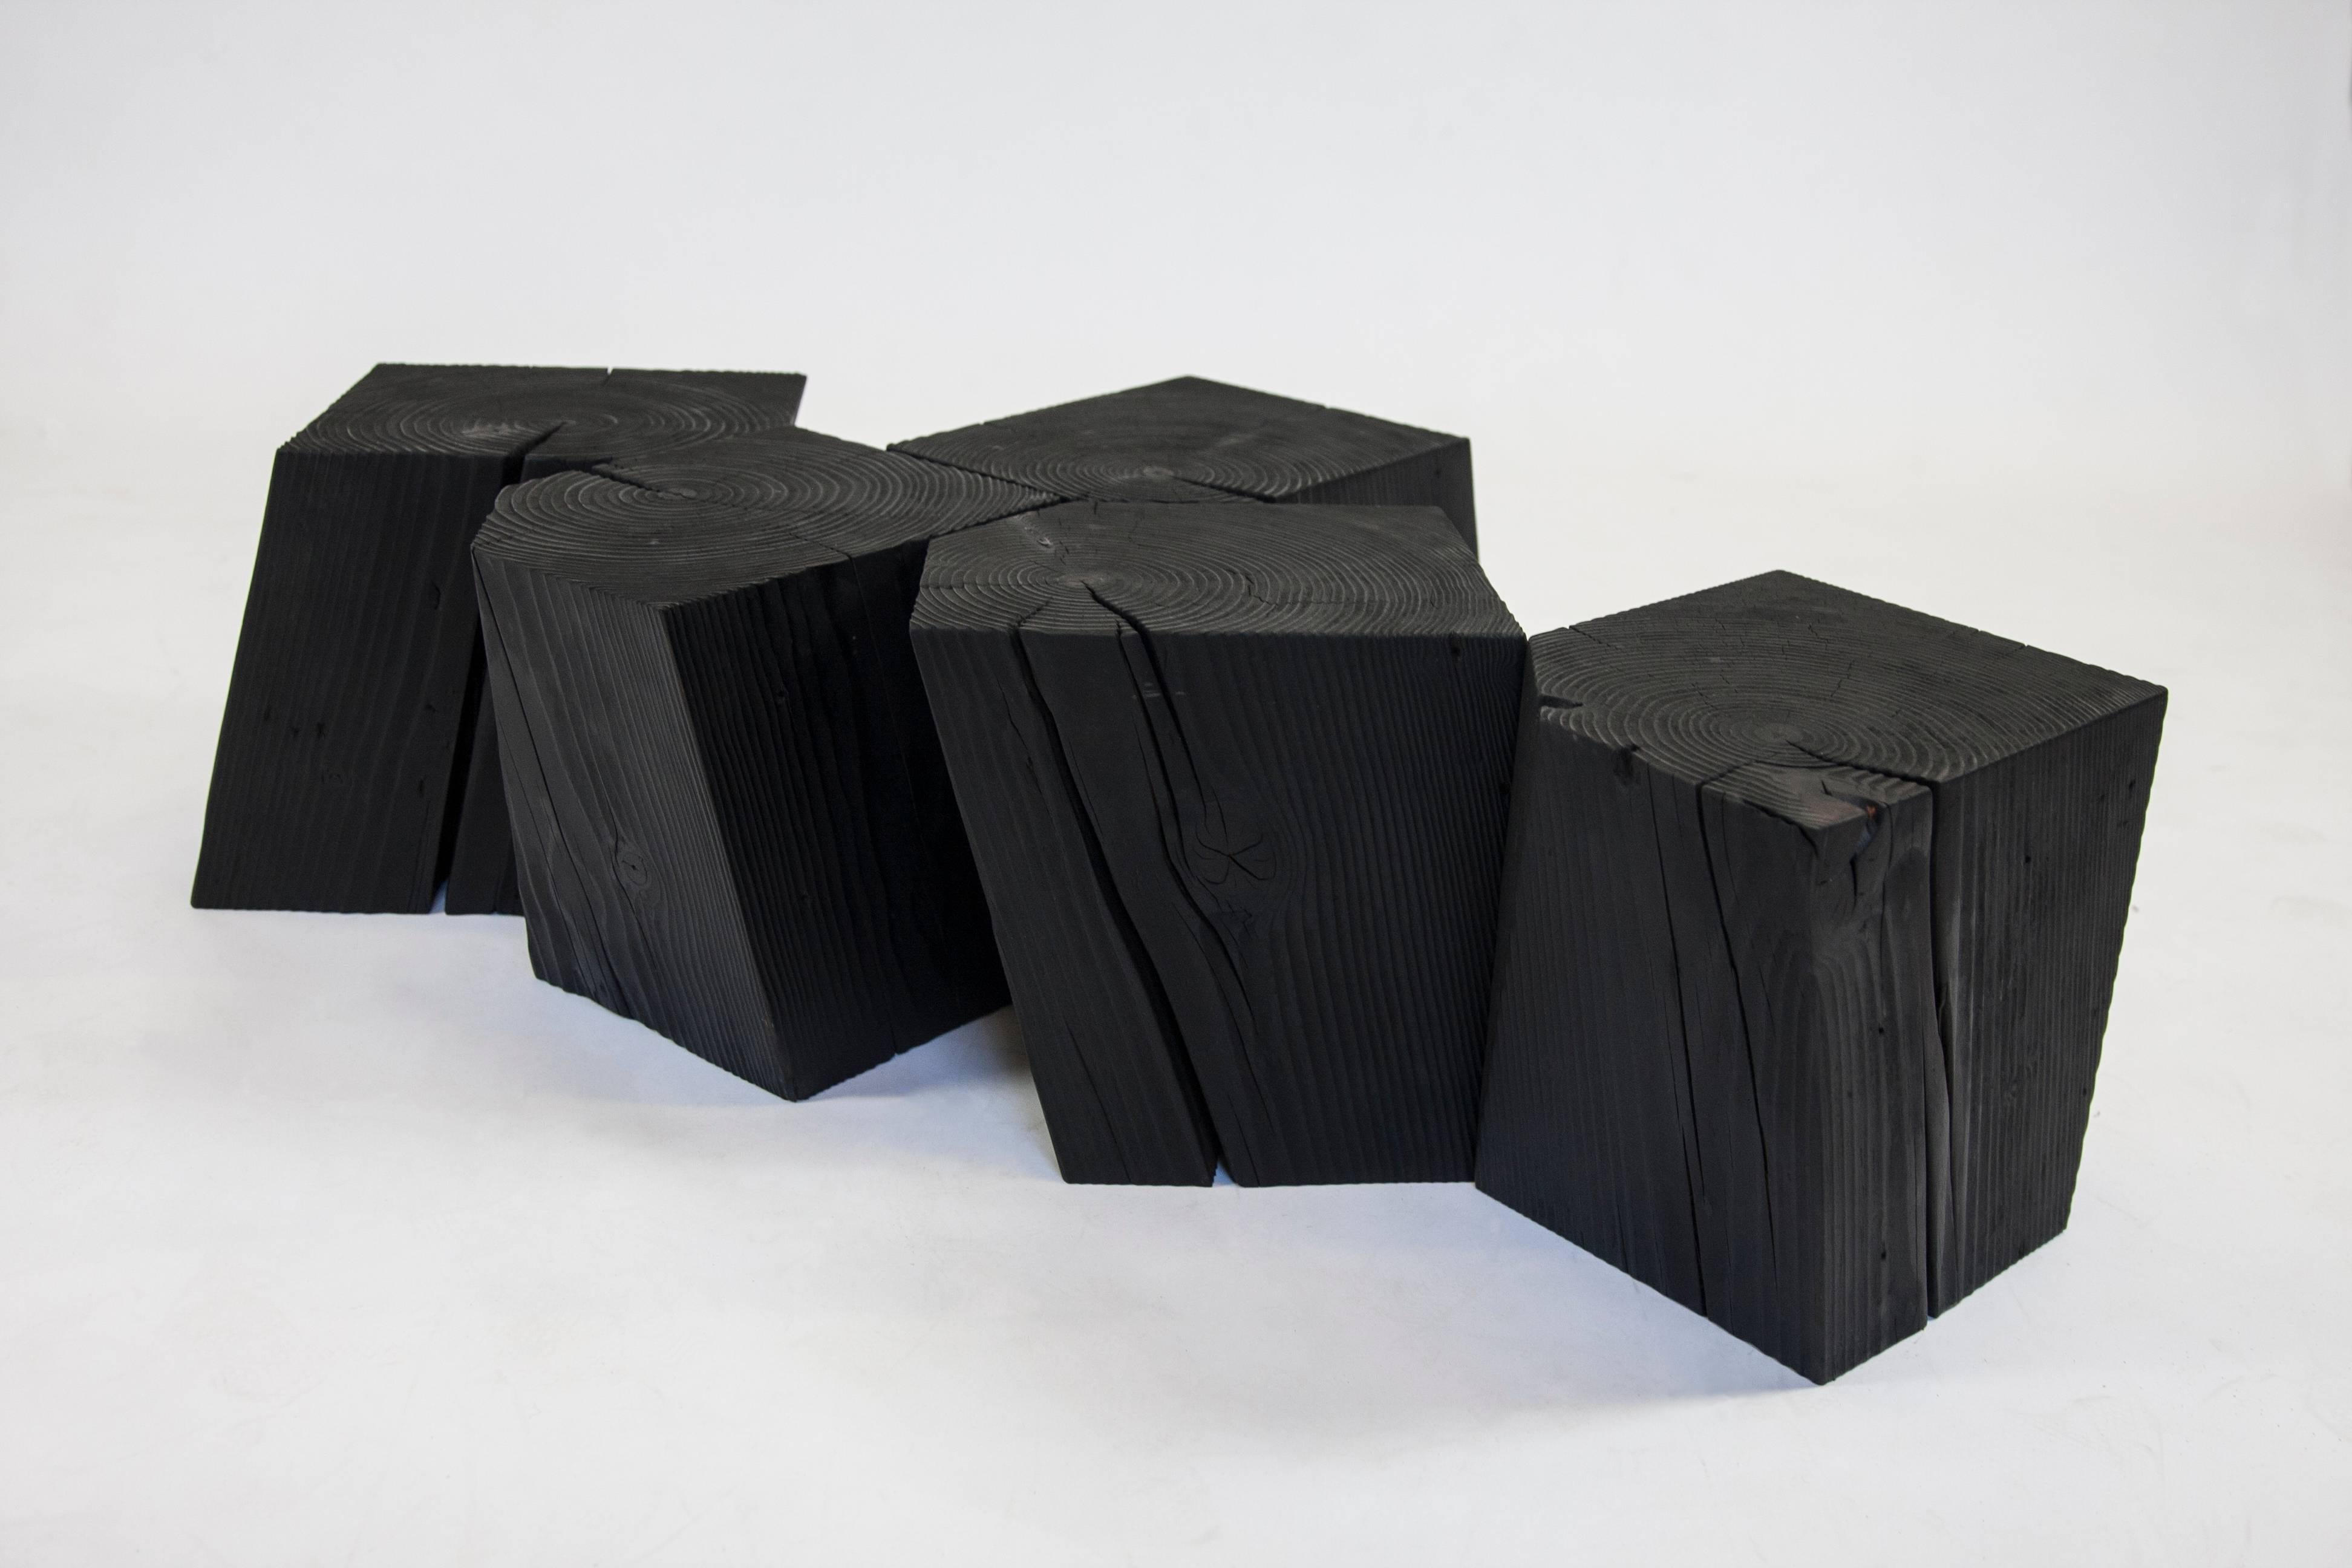 Blackened Customization for Sarah, Charcoal Blocks, Sculptural, Geometric, Tables